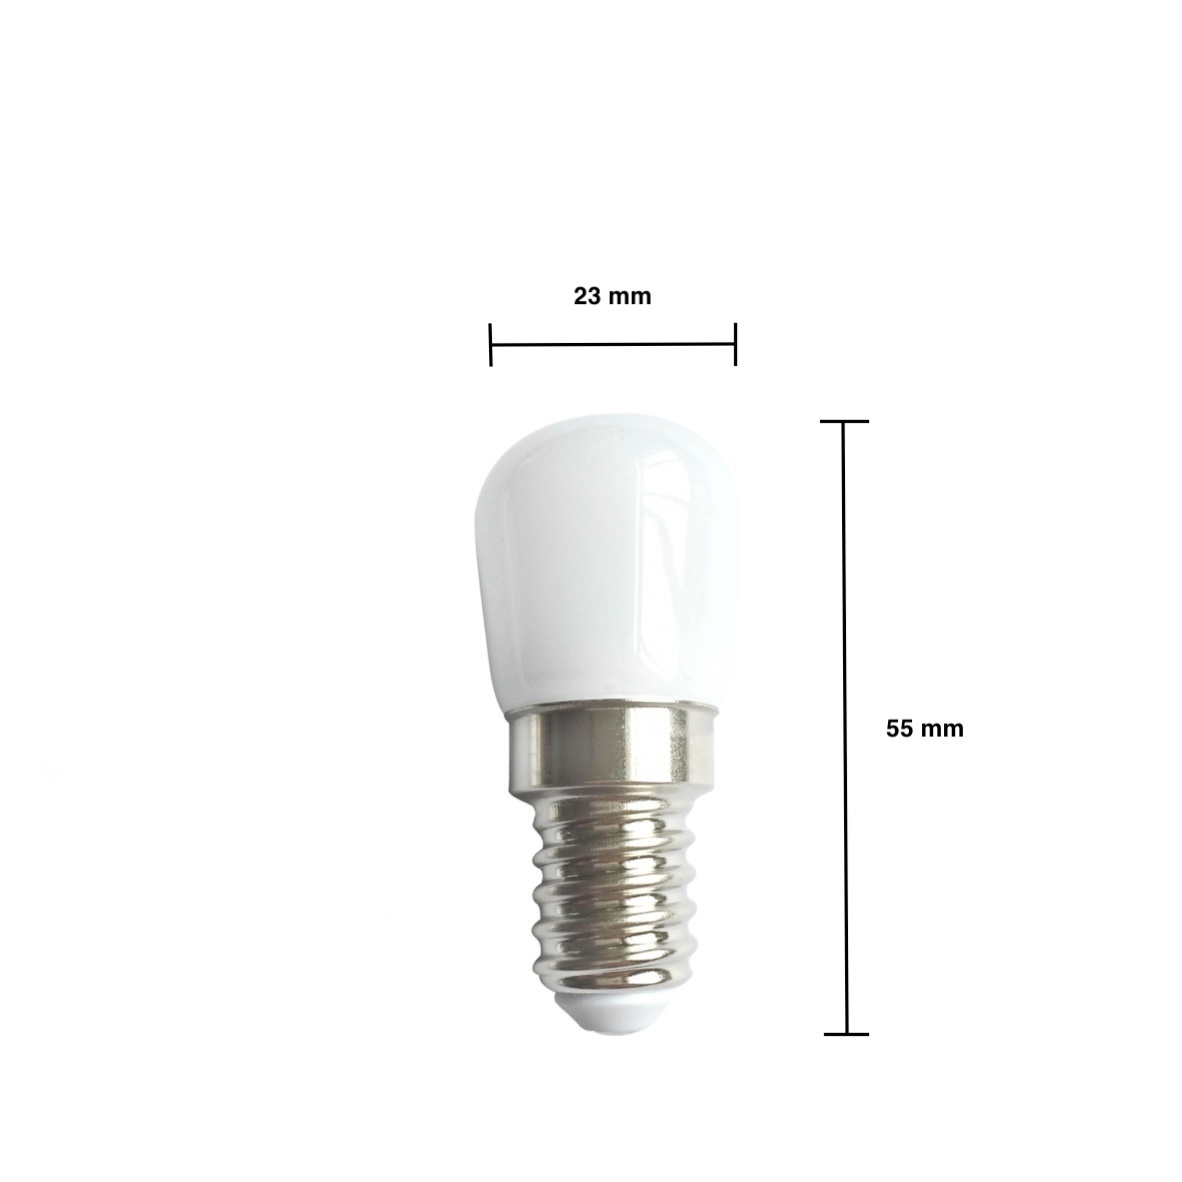 beneden sigaar Purper LED Koelkast lamp E14 fitting - 6000K daglicht wit - 2W vervangt 16W -  Ledpanelendiscounter.nl